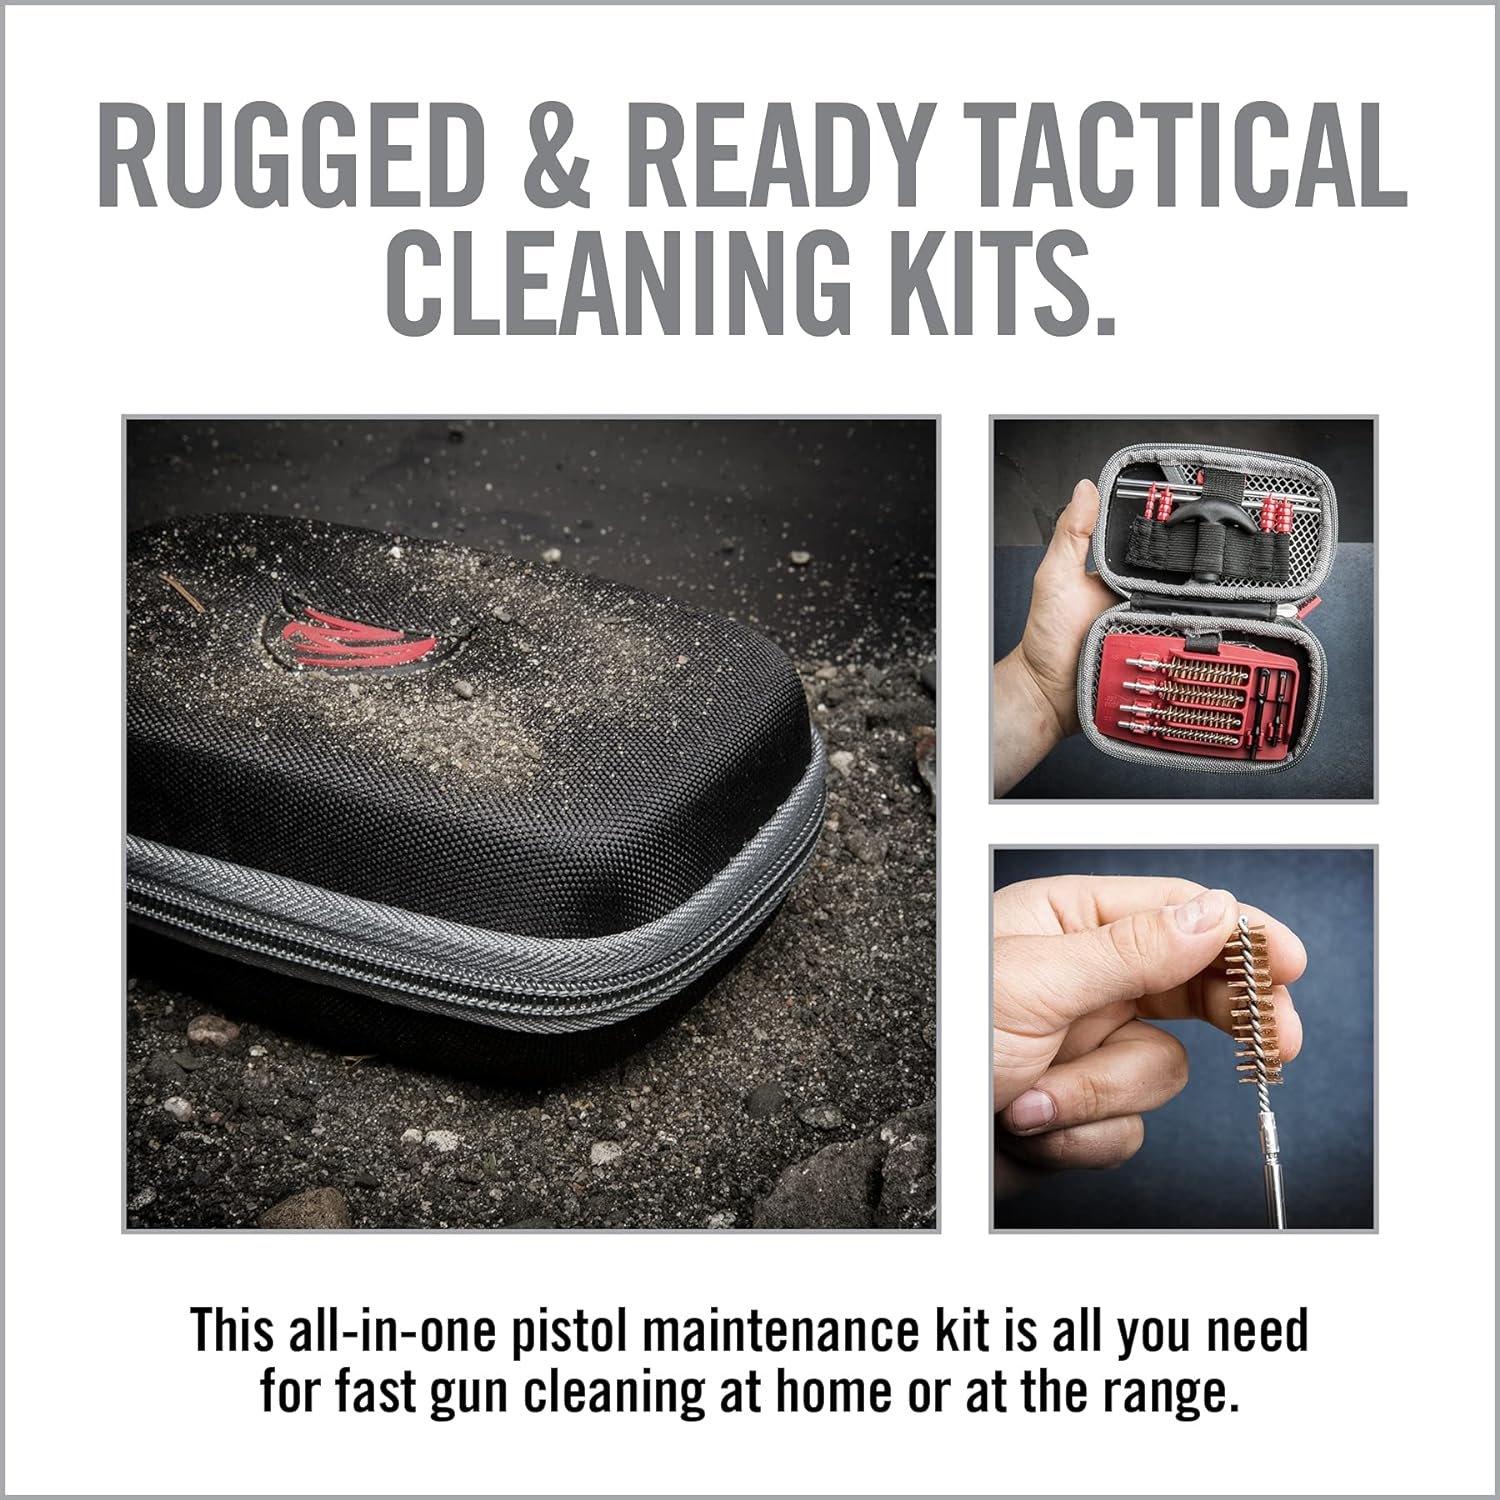 Real Avid Handgun Cleaning Kit Review